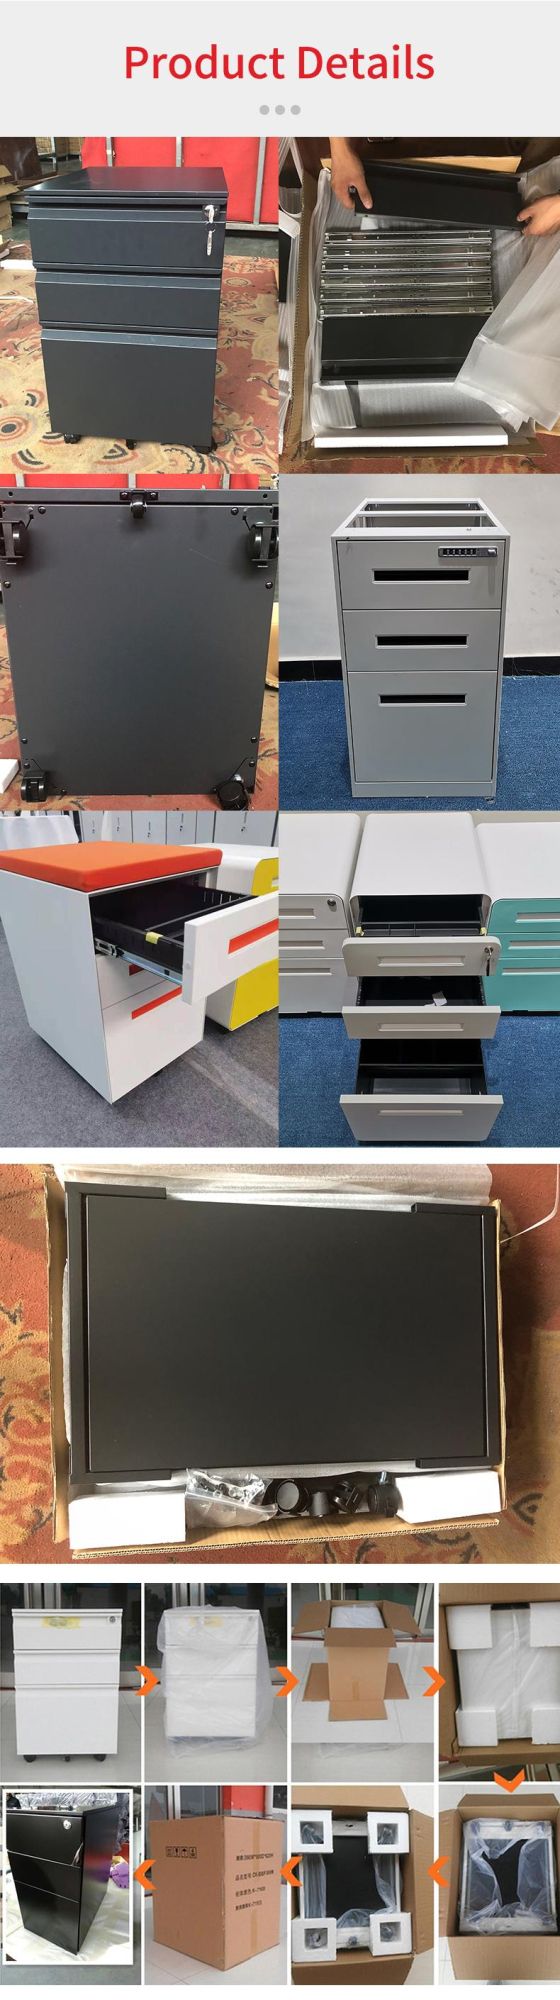 Small Under Desk White 3 Drawer Mobile Pedestal Cabinet